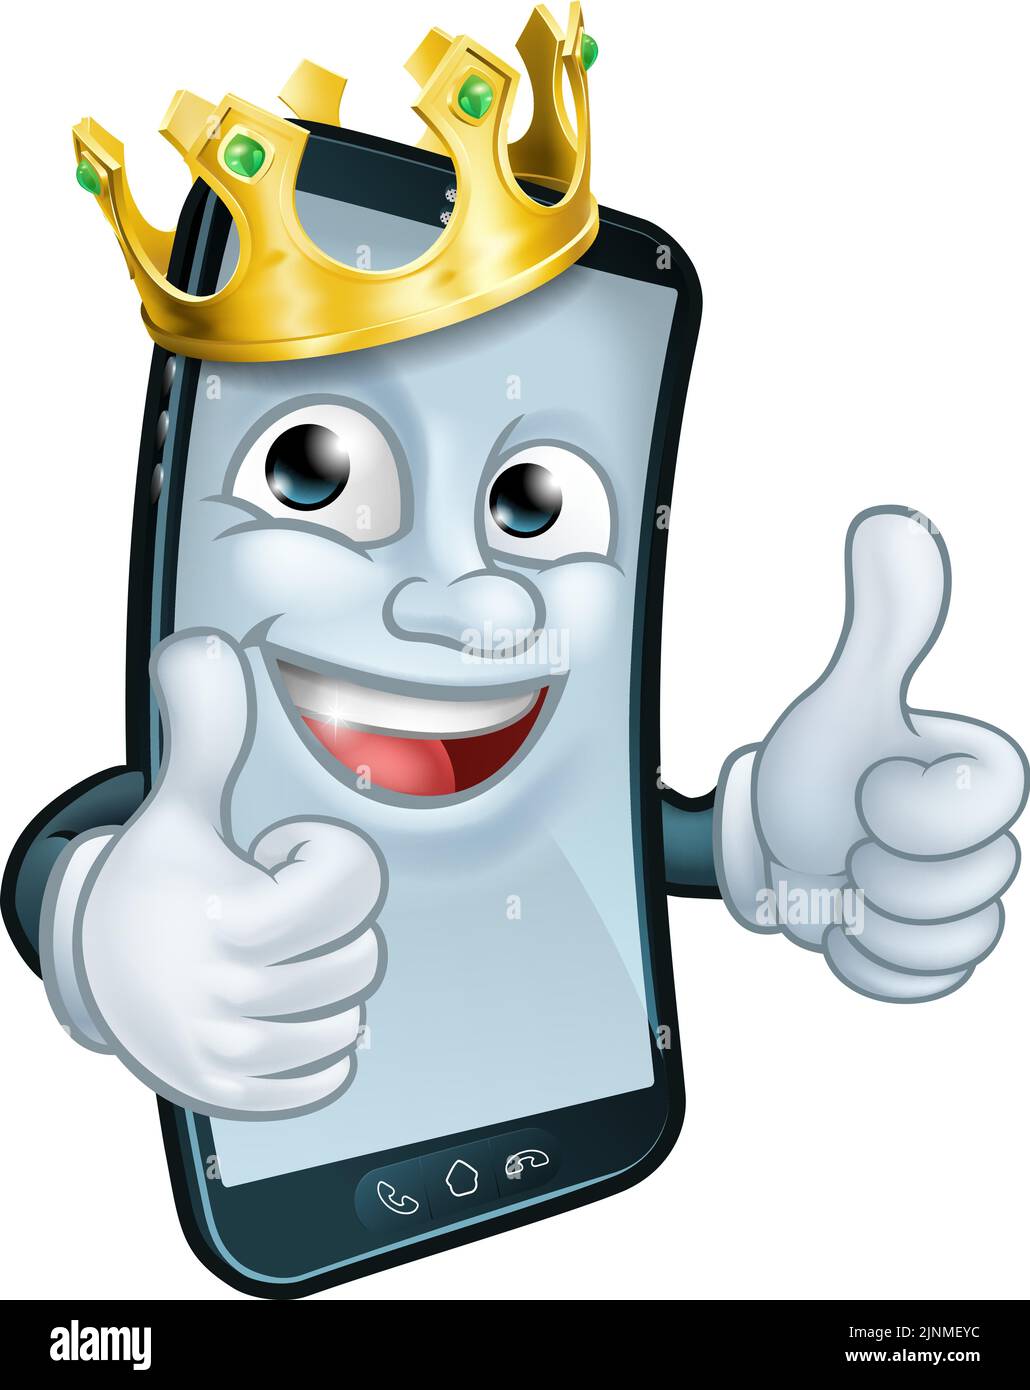 Mobile Phone King Crown Thumbs Up Cartoon Mascot Stock Vector